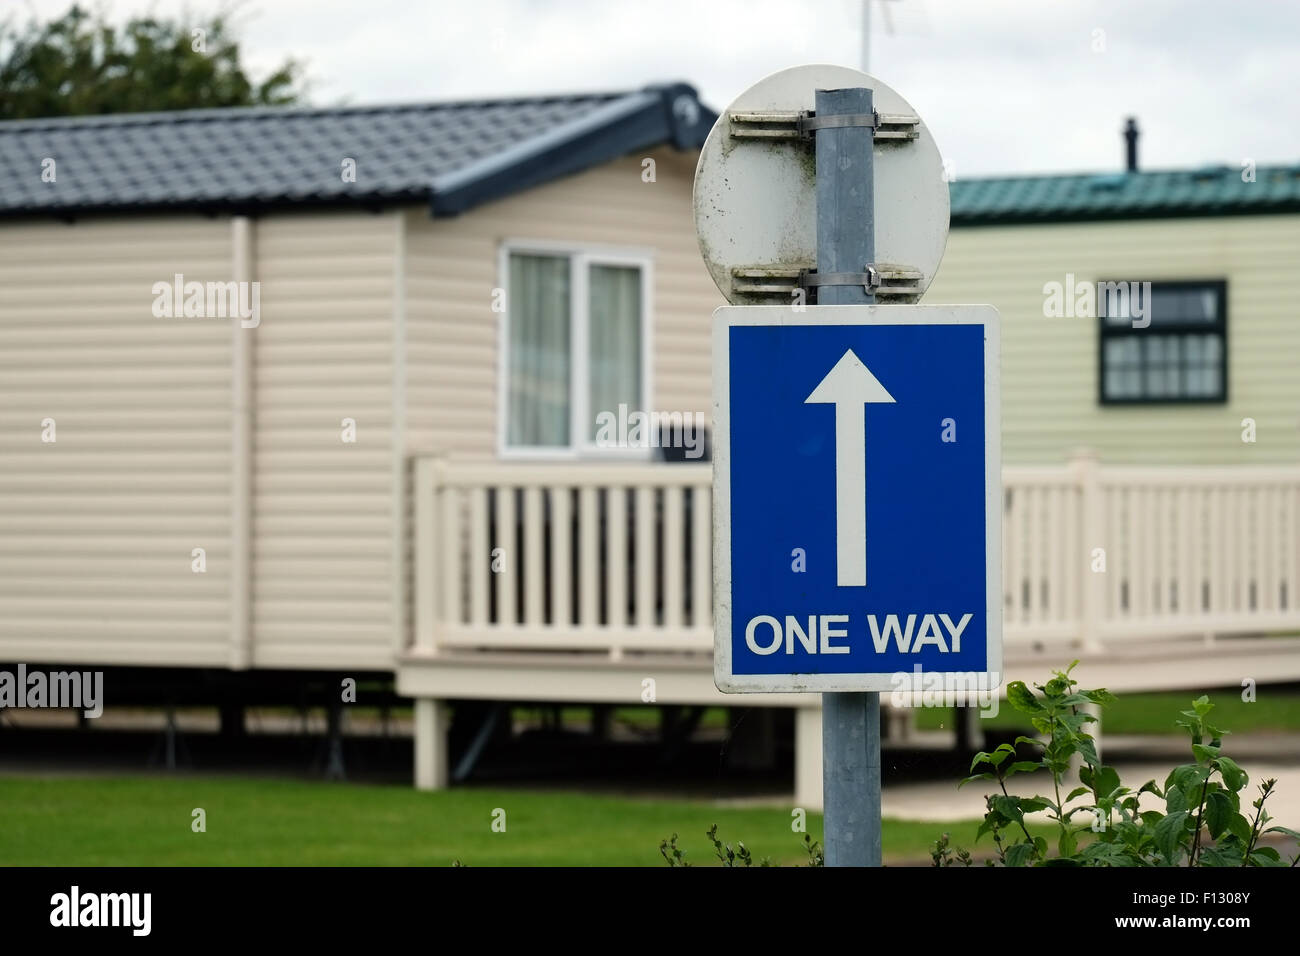 One way sign in caravan park. Banque D'Images